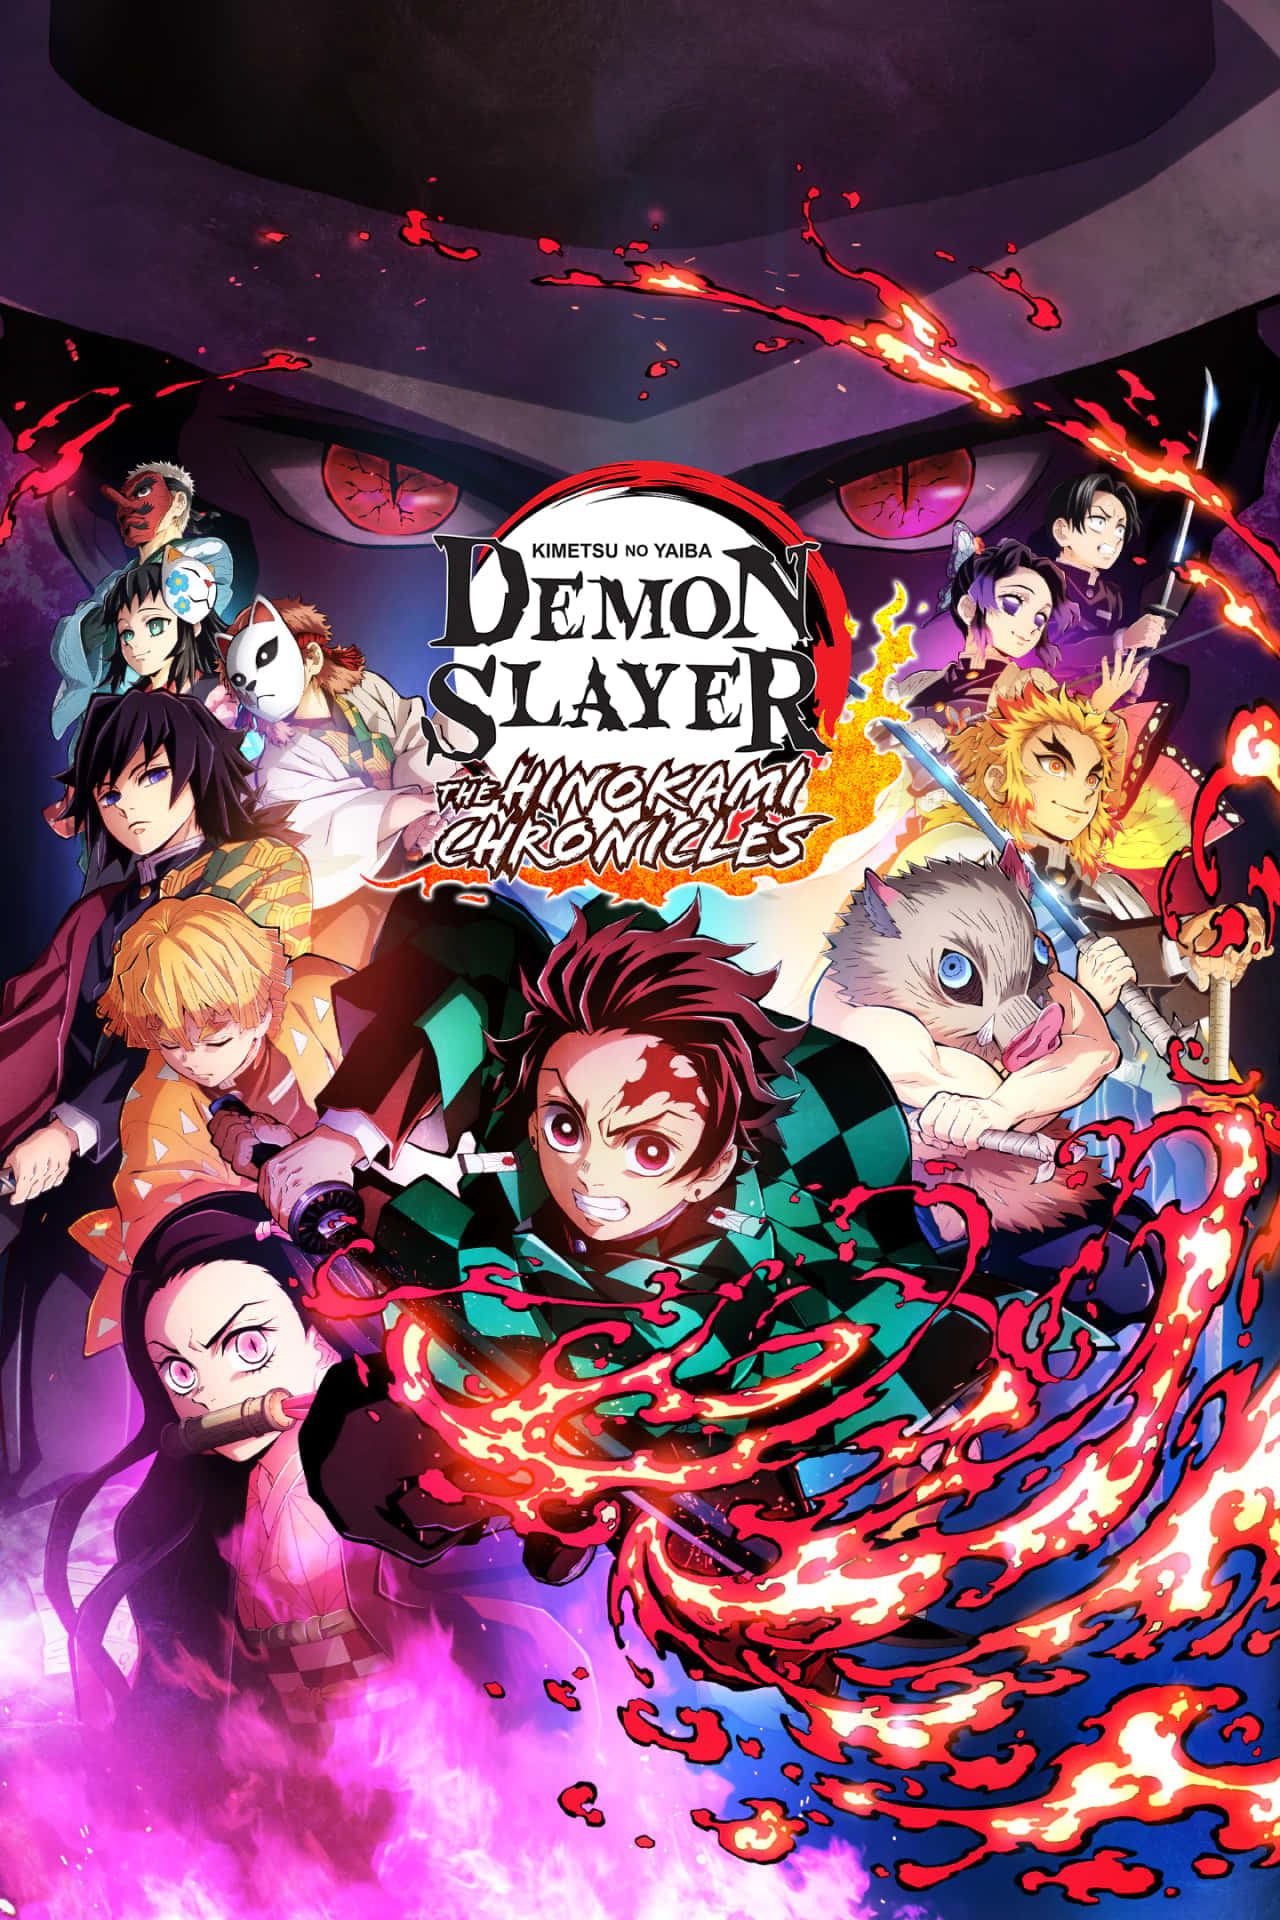 Demon slayer manga hi-res stock photography and images - Alamy